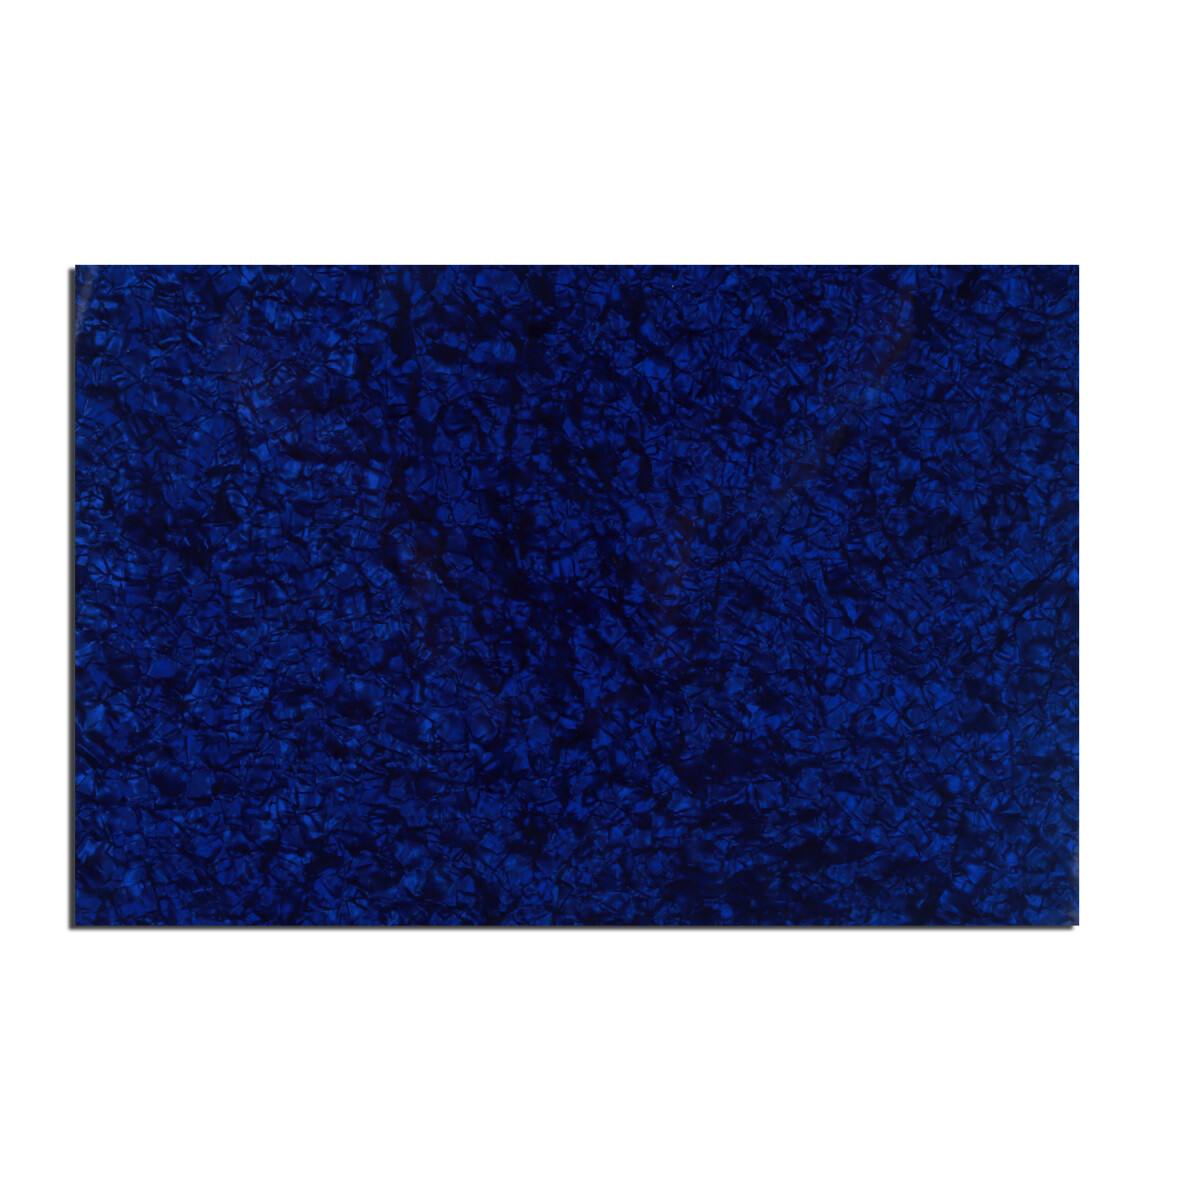 Brio Pickguard Blanks 12" x 17" 4 Ply Pearloid Blue